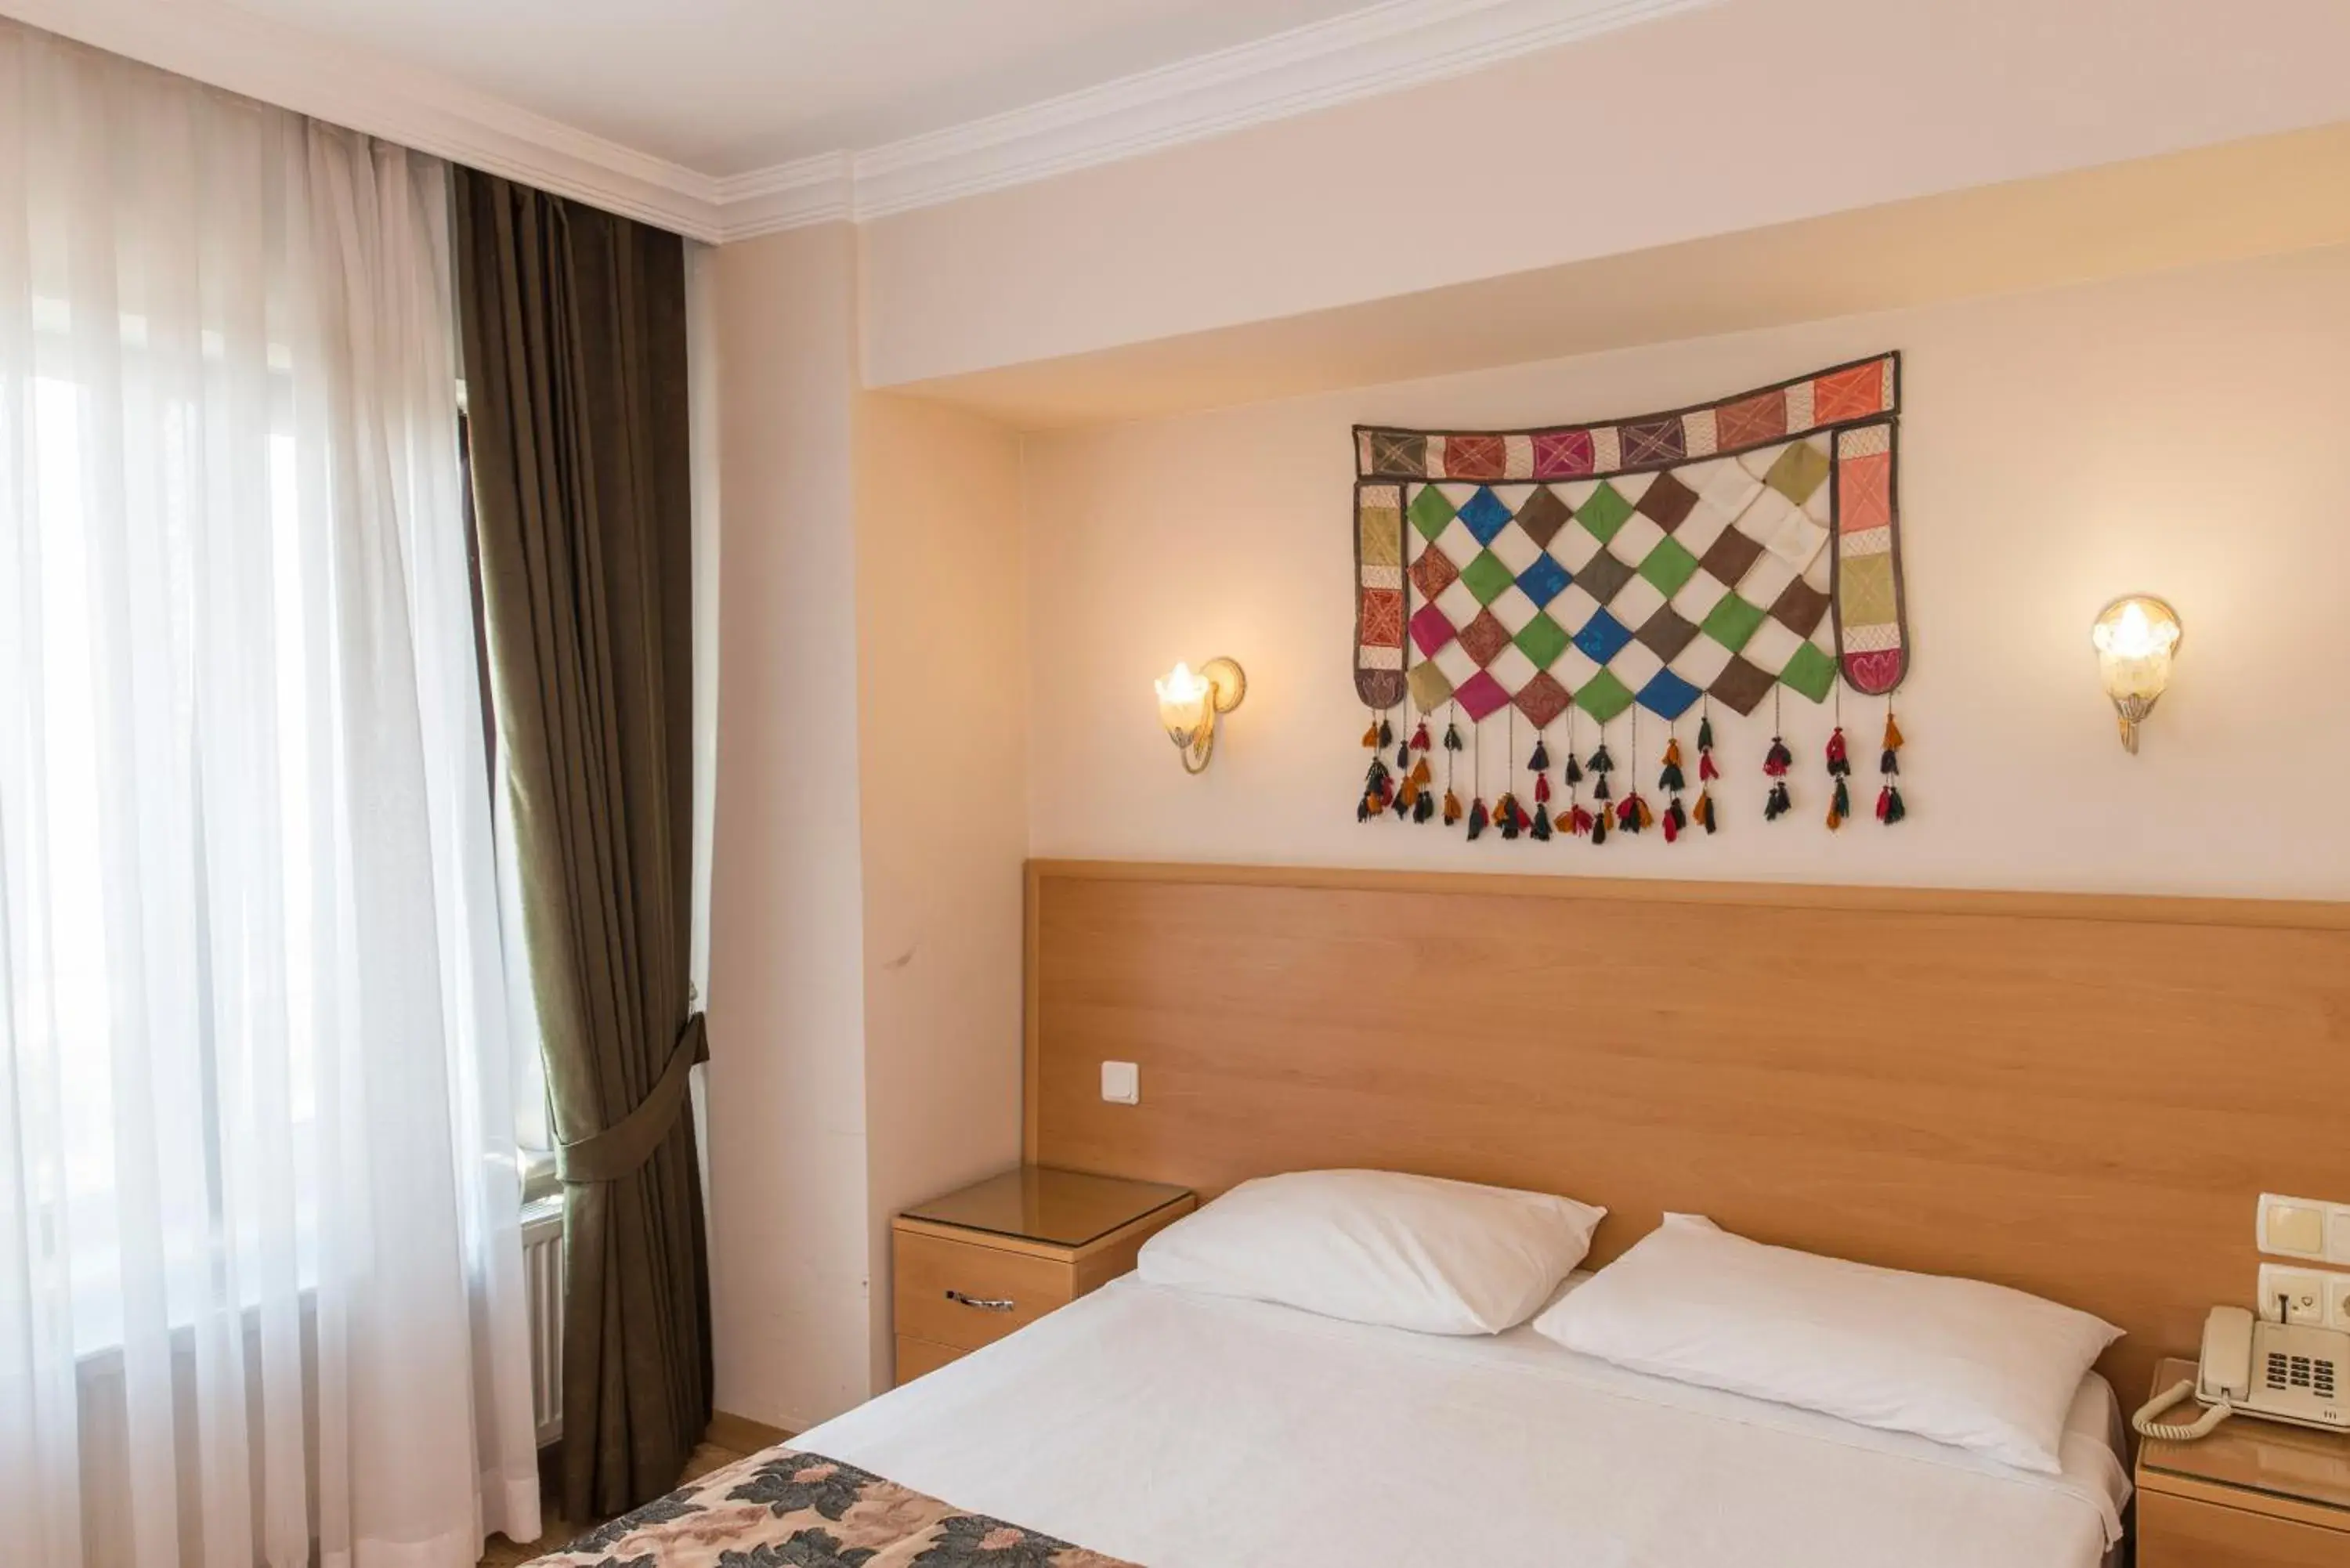 Bed, Room Photo in Deniz Houses